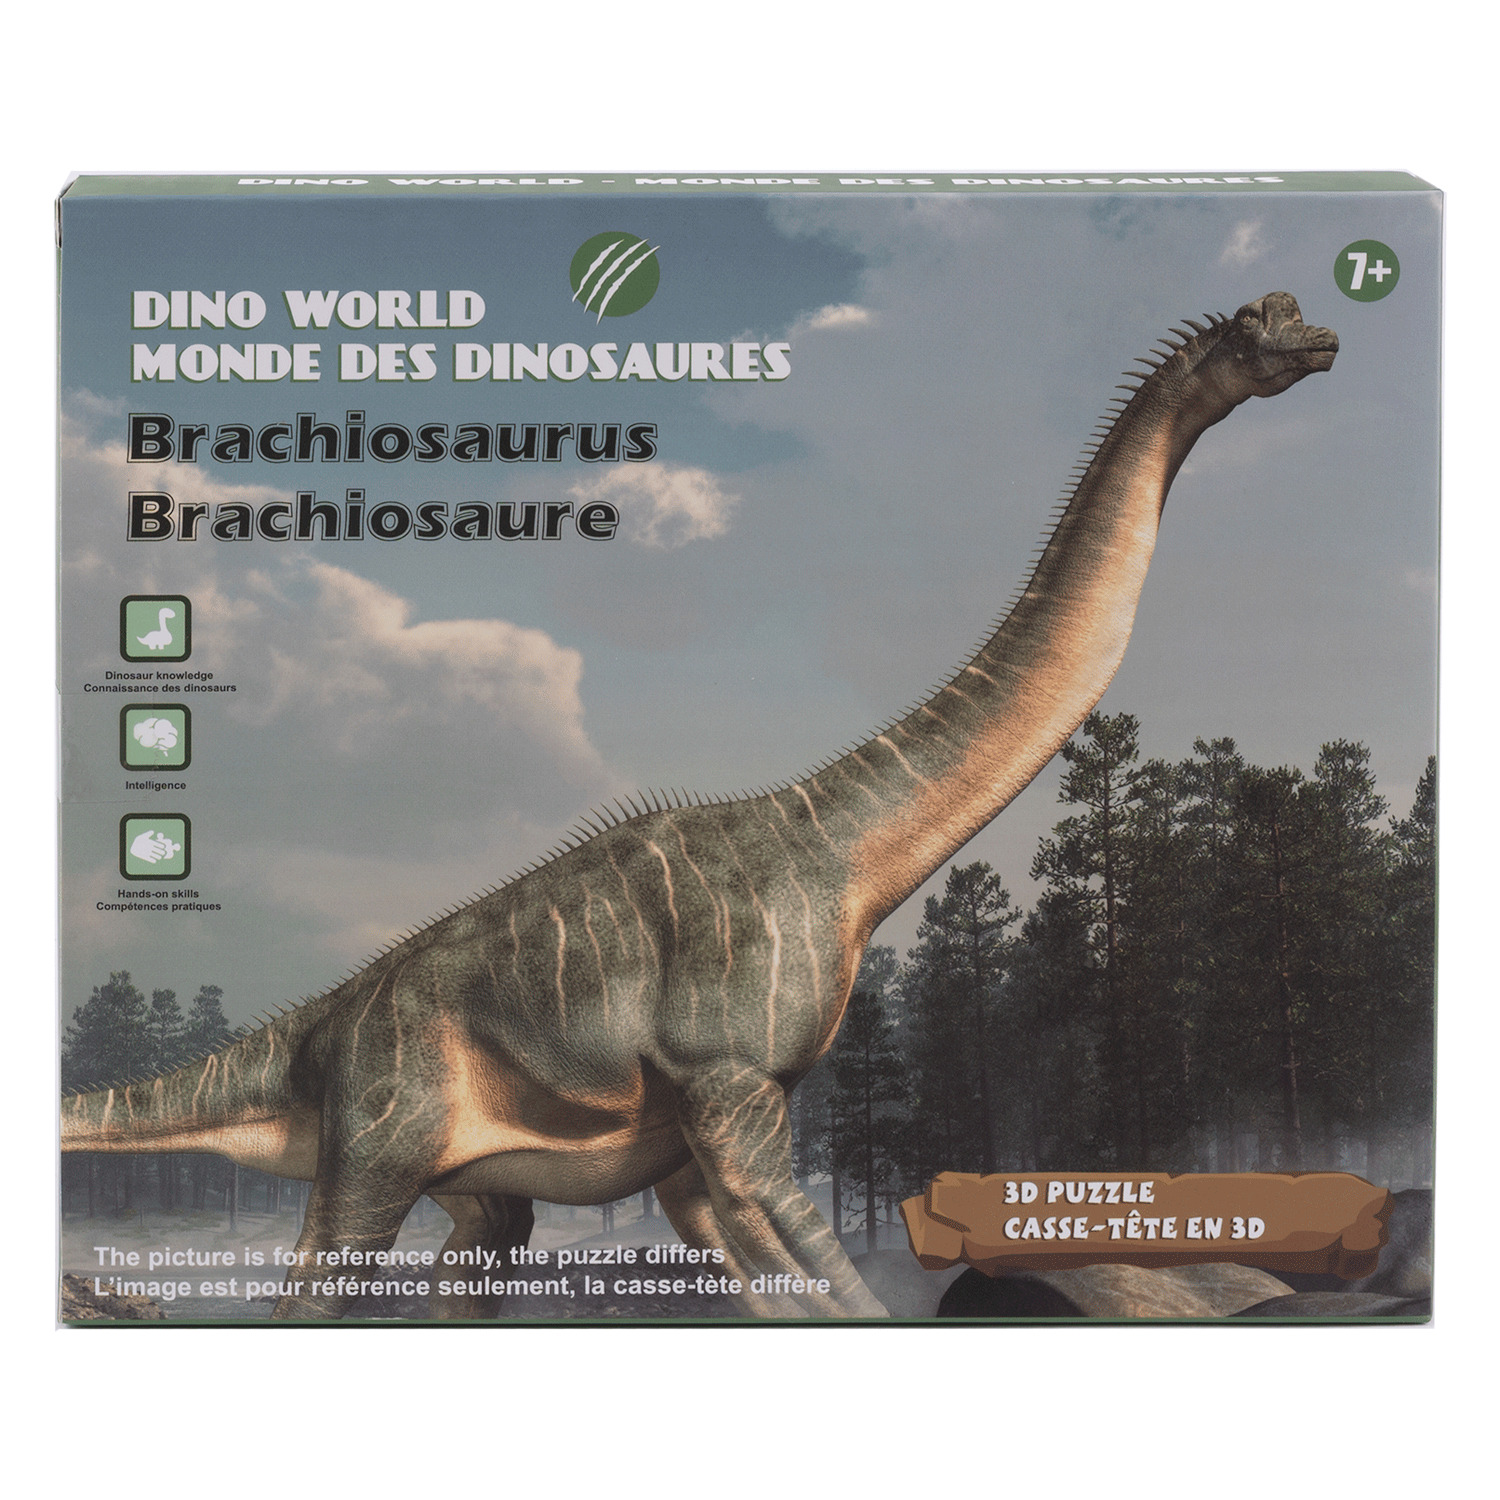 Puzzle - Dino world, 3D puzzle, Brachiosaurus